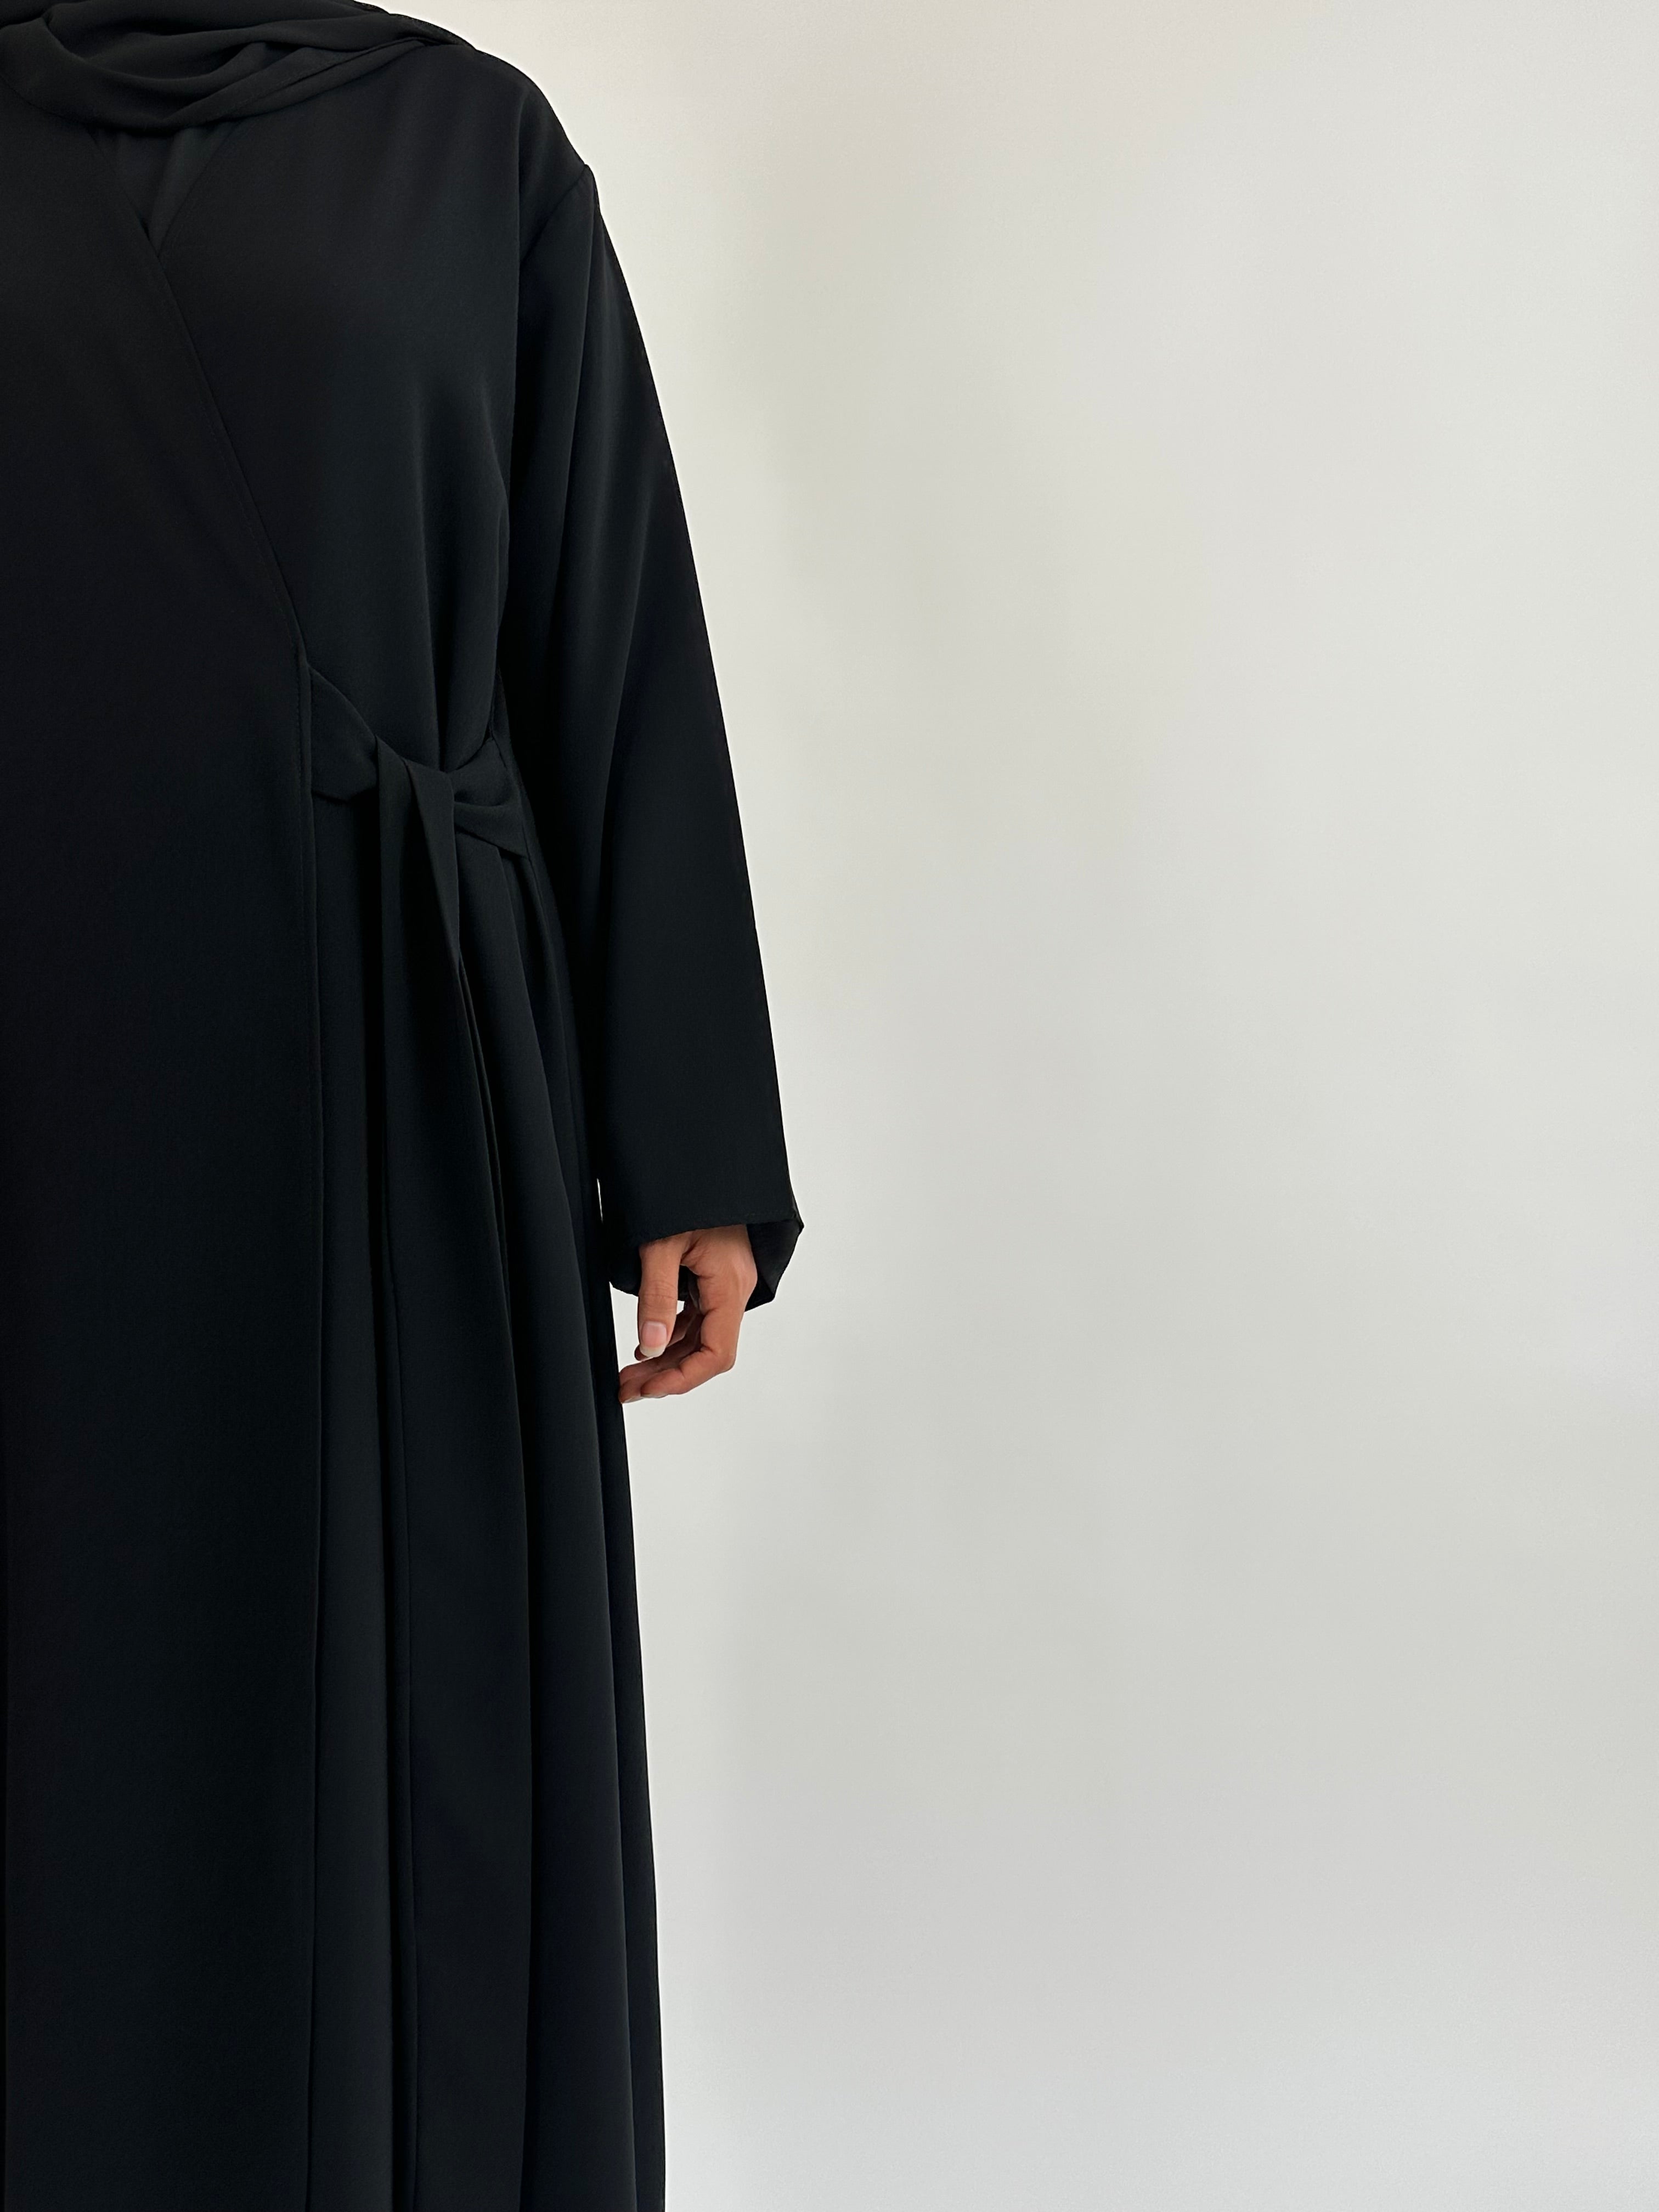 Black Linen Wrap Abaya